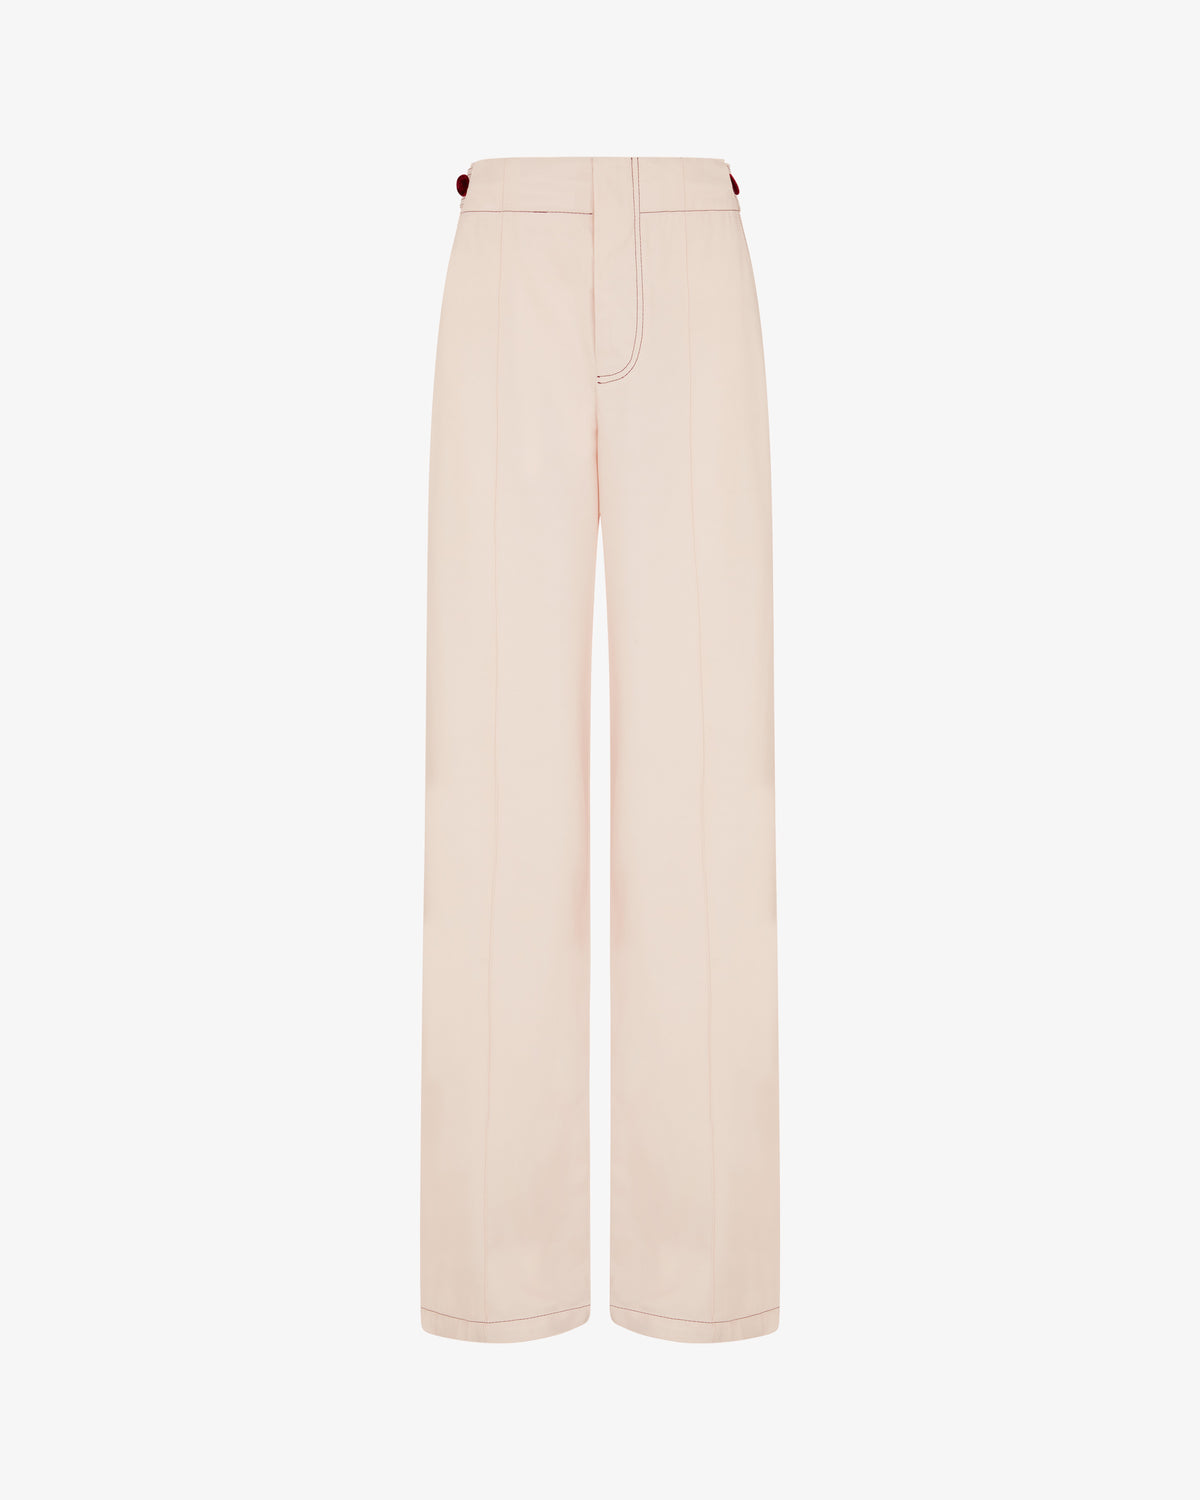 Pocket Trouser - Pale Pink